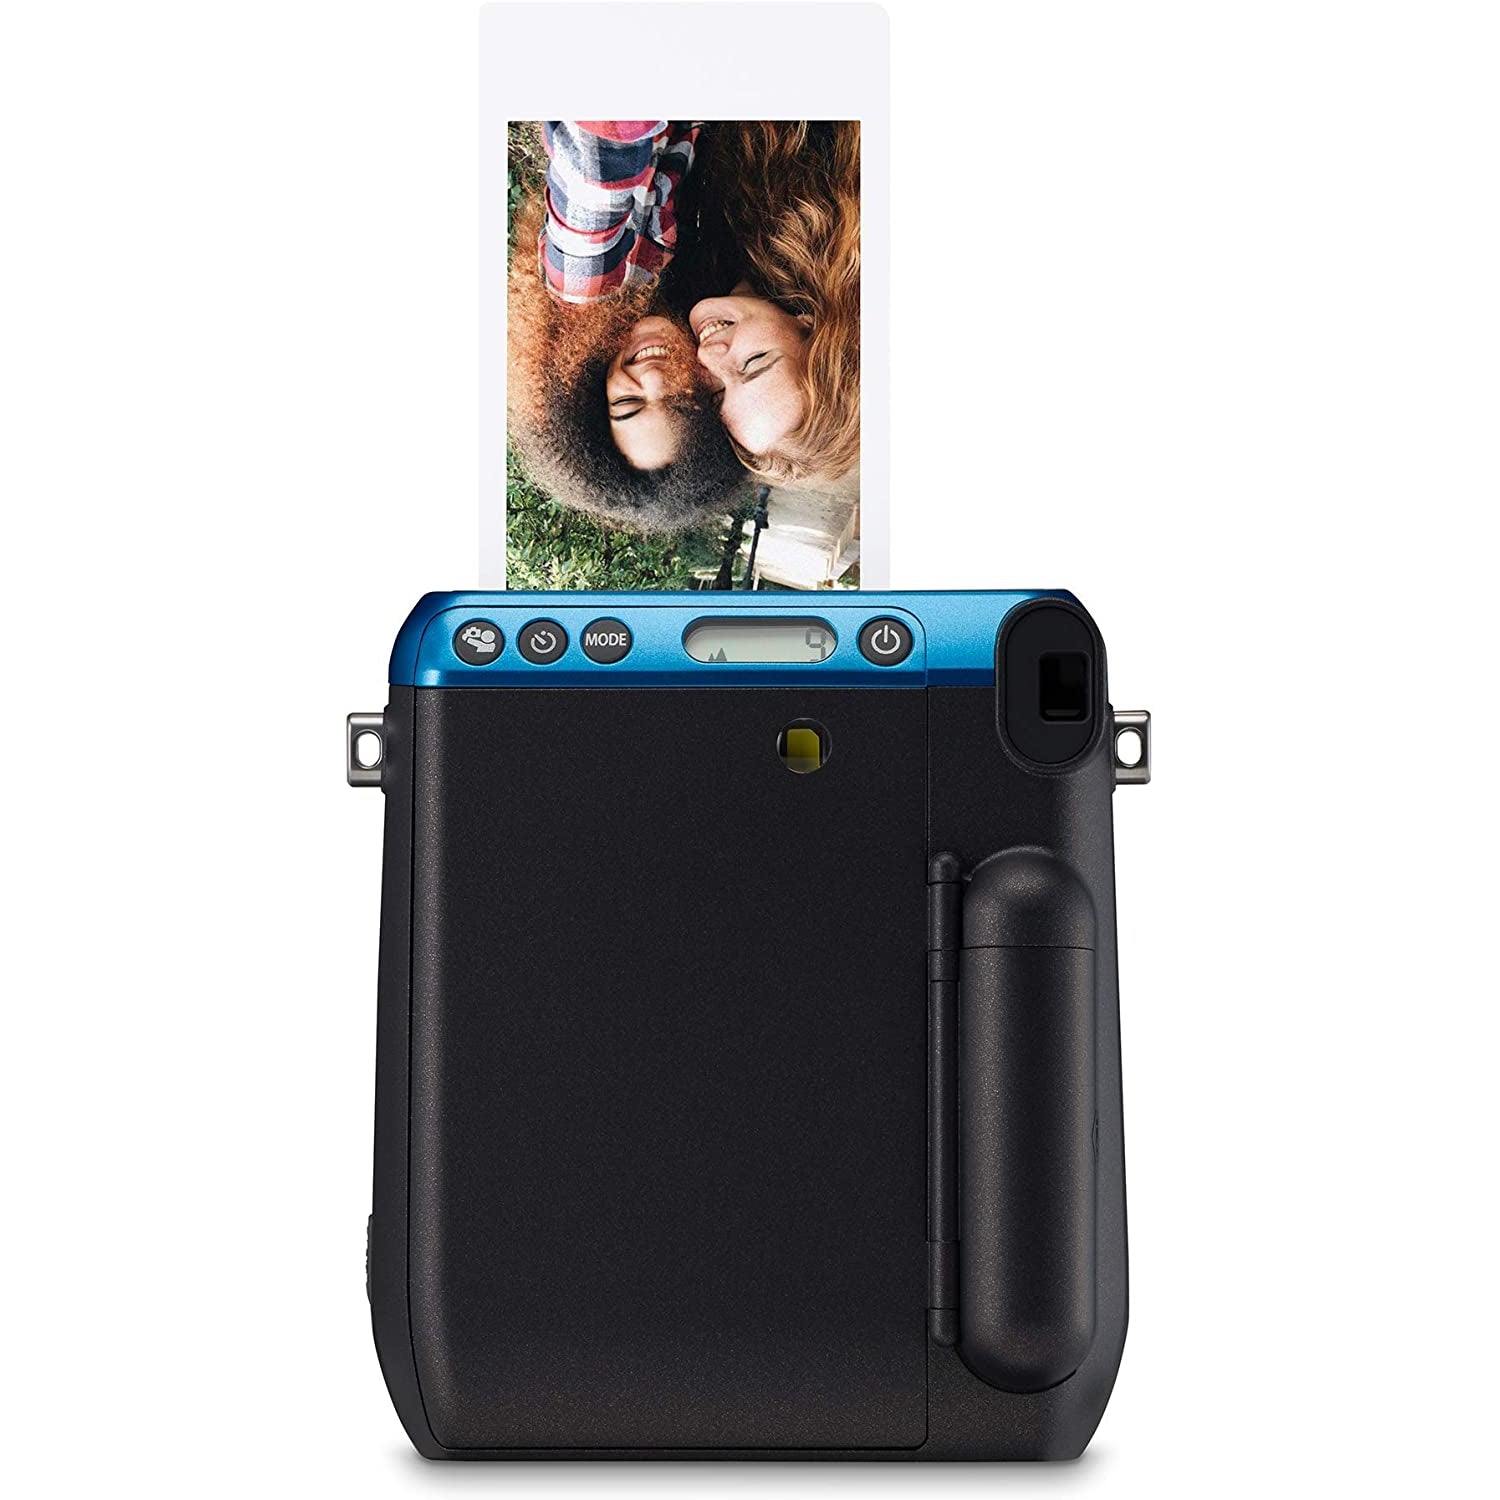 Fujifilm Instax Mini 70 Instant Camera, Selfie Mode, Built-In Flash & Hand Strap, Blue